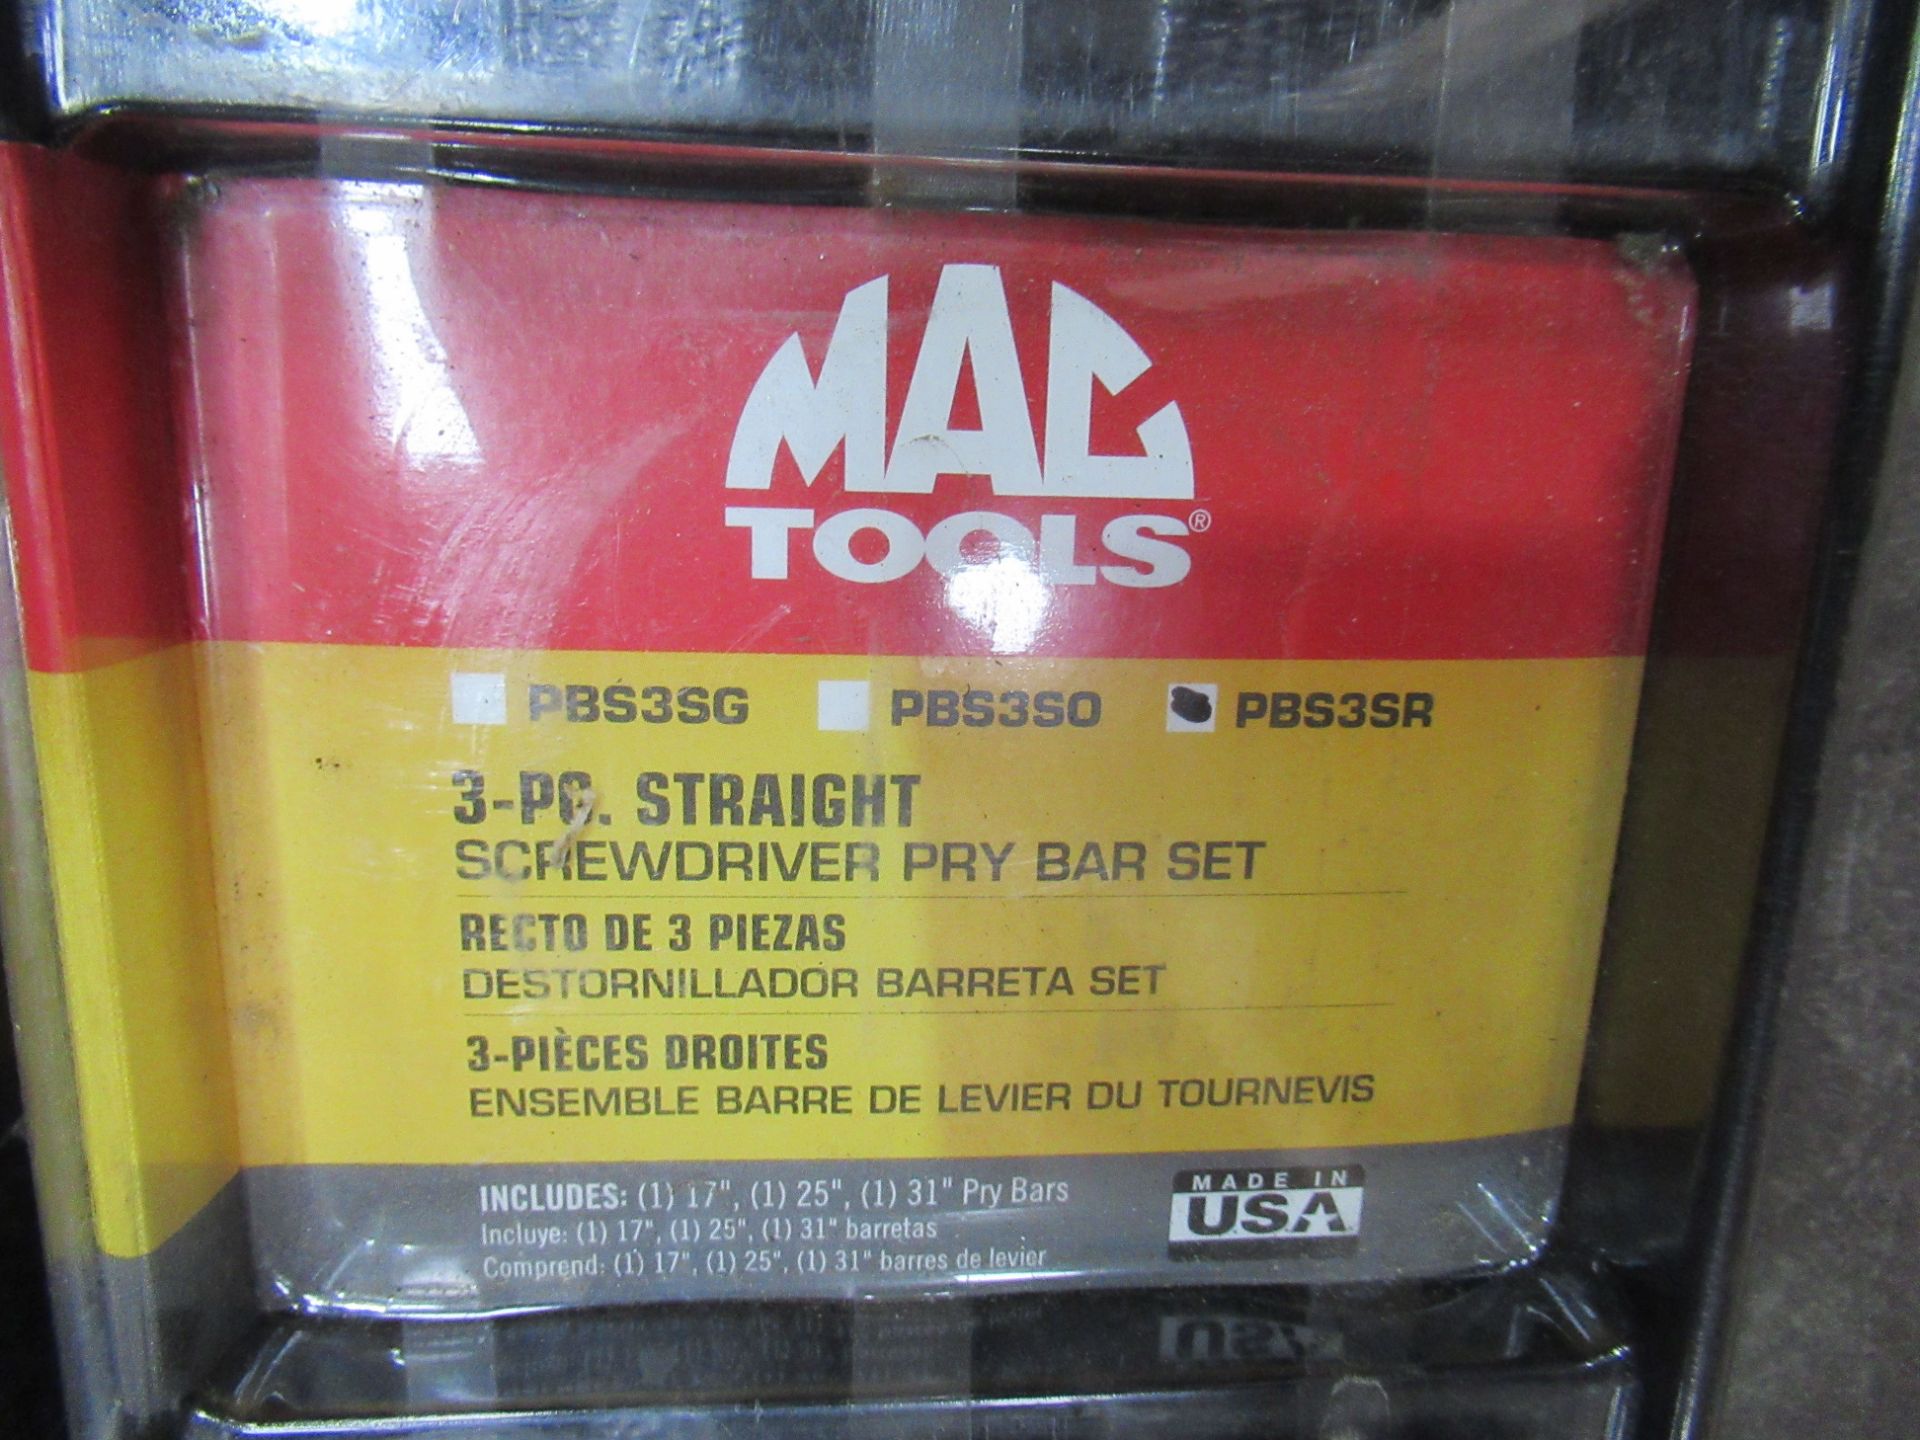 2x 3pc MAC Tools Screwdriver Pry Bar Sets - Image 3 of 3